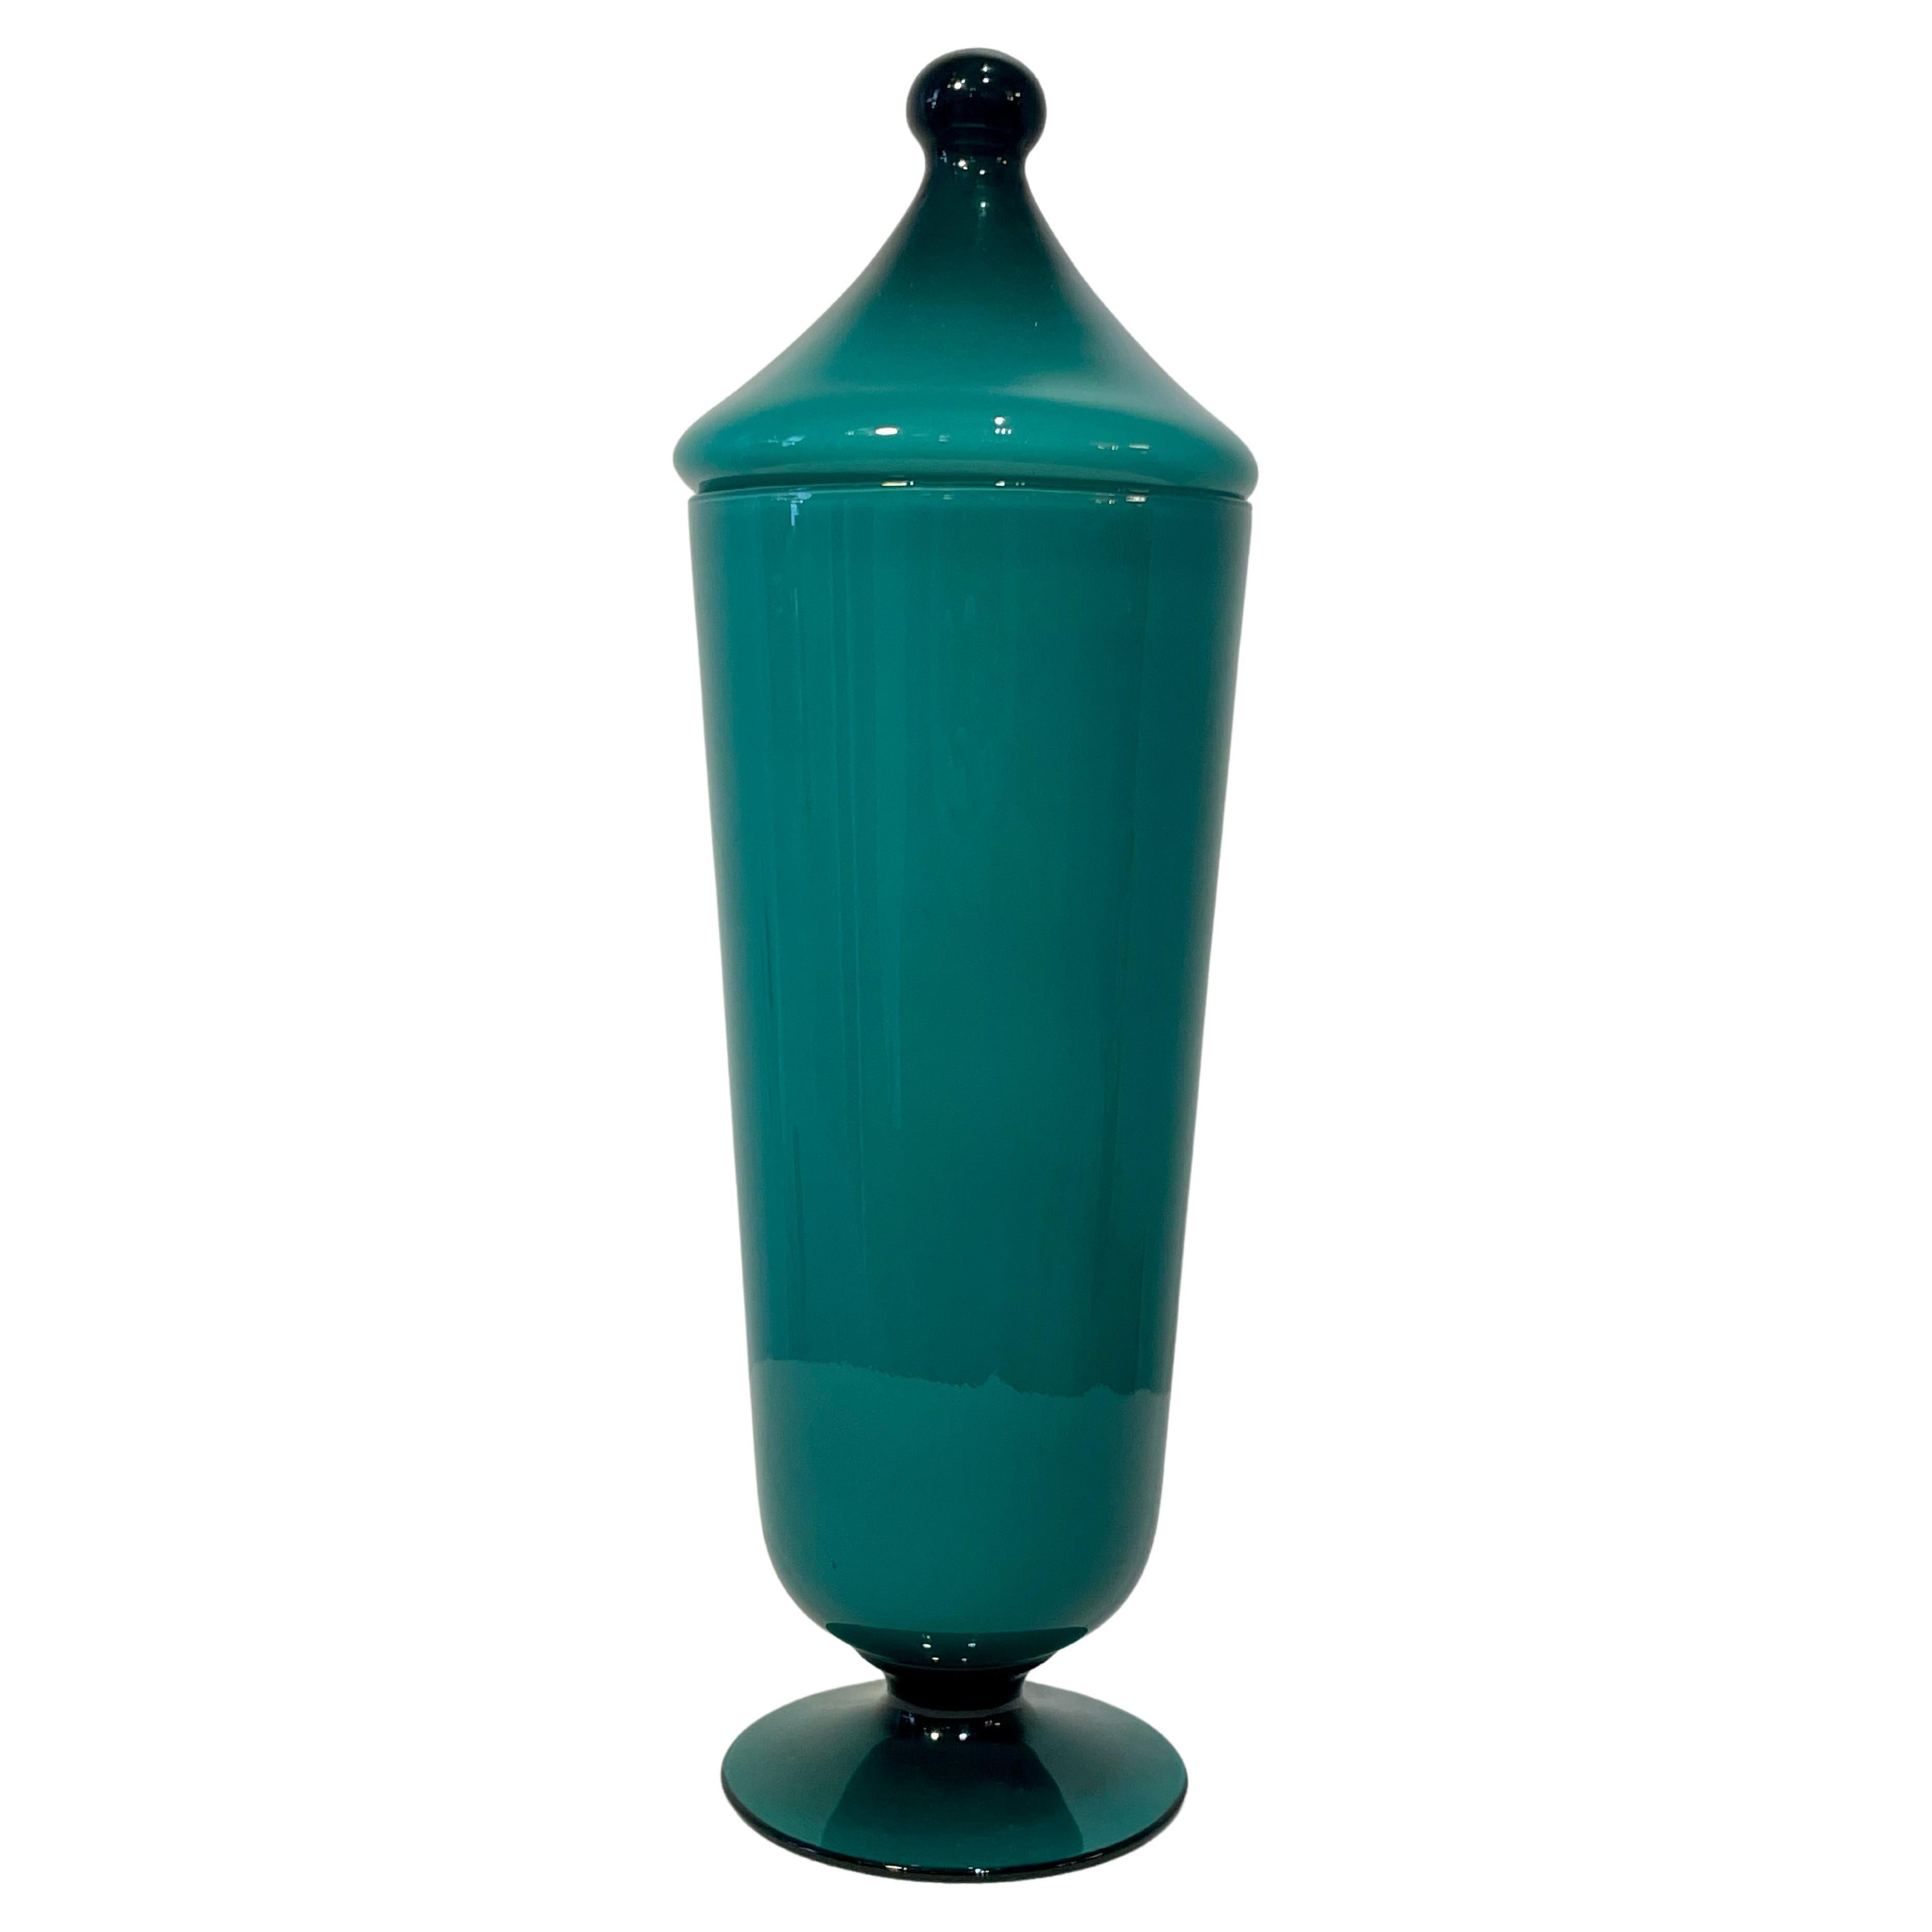 Turquoise Vintage Murano Glass Jar, Tall